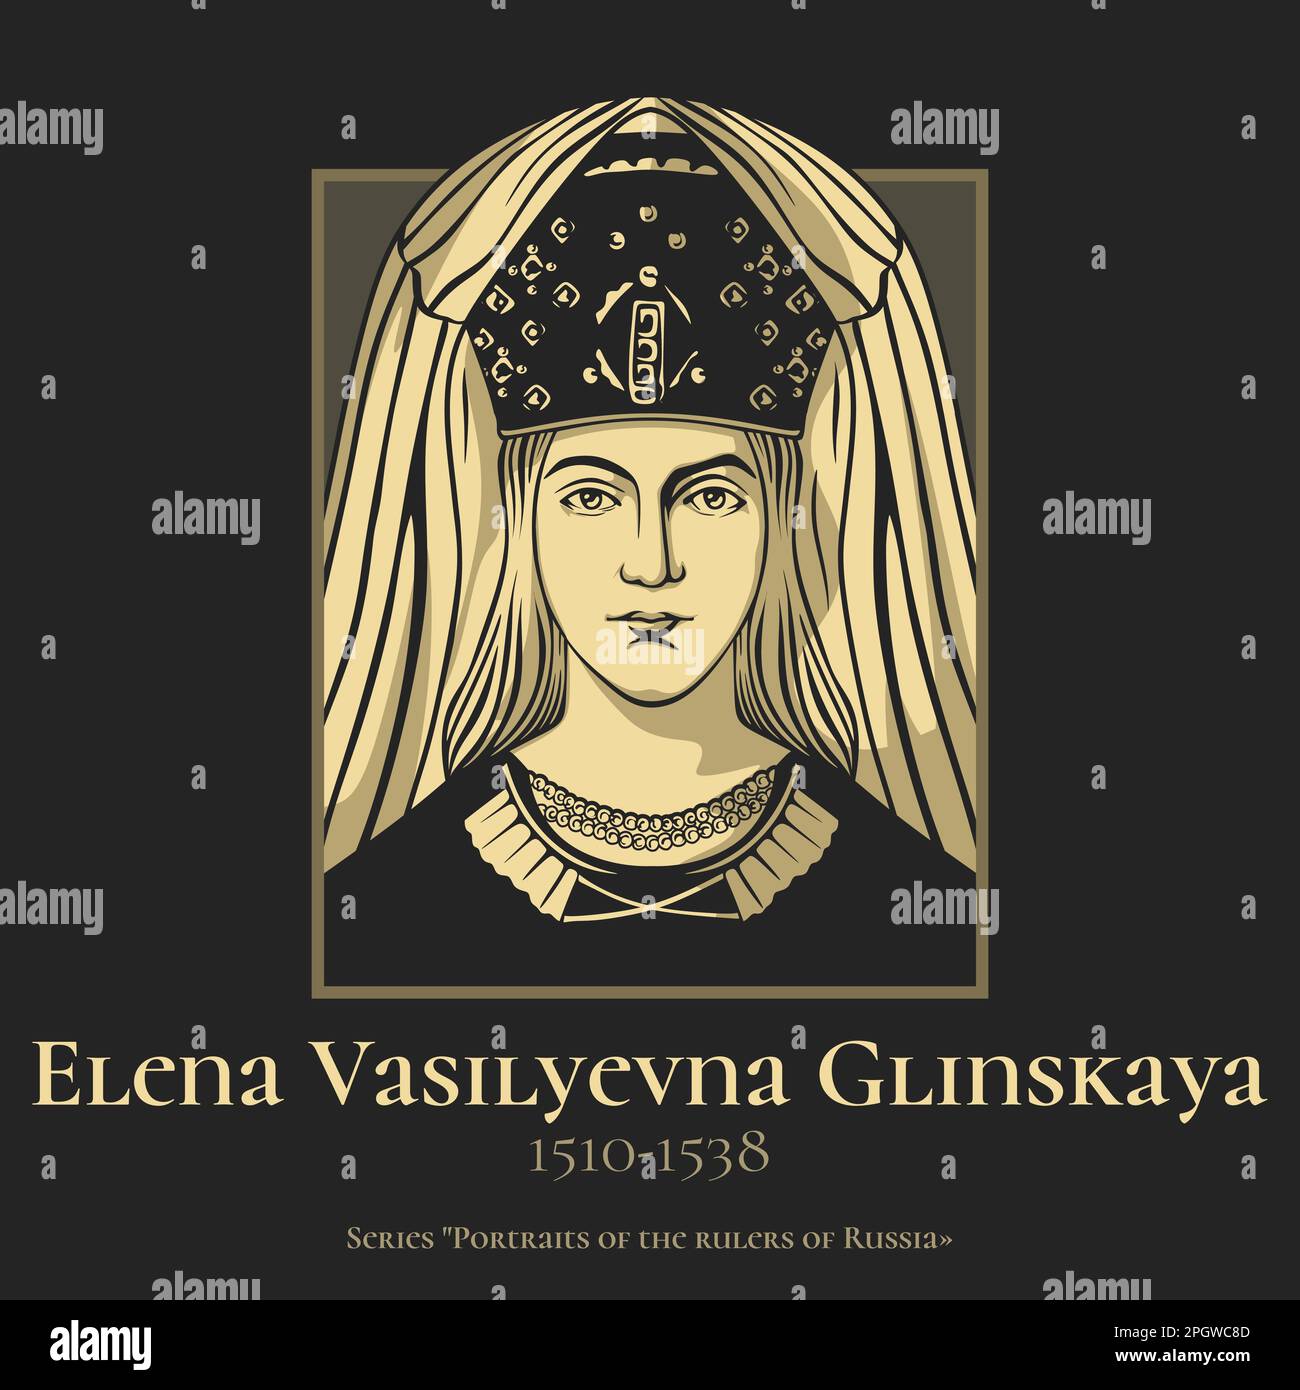 Elena Vasilyevna Glinskaya (1510-1538) was the Grand Princess consort of Russia, as the second wife of Grand Prince Vasili III. Stock Vector